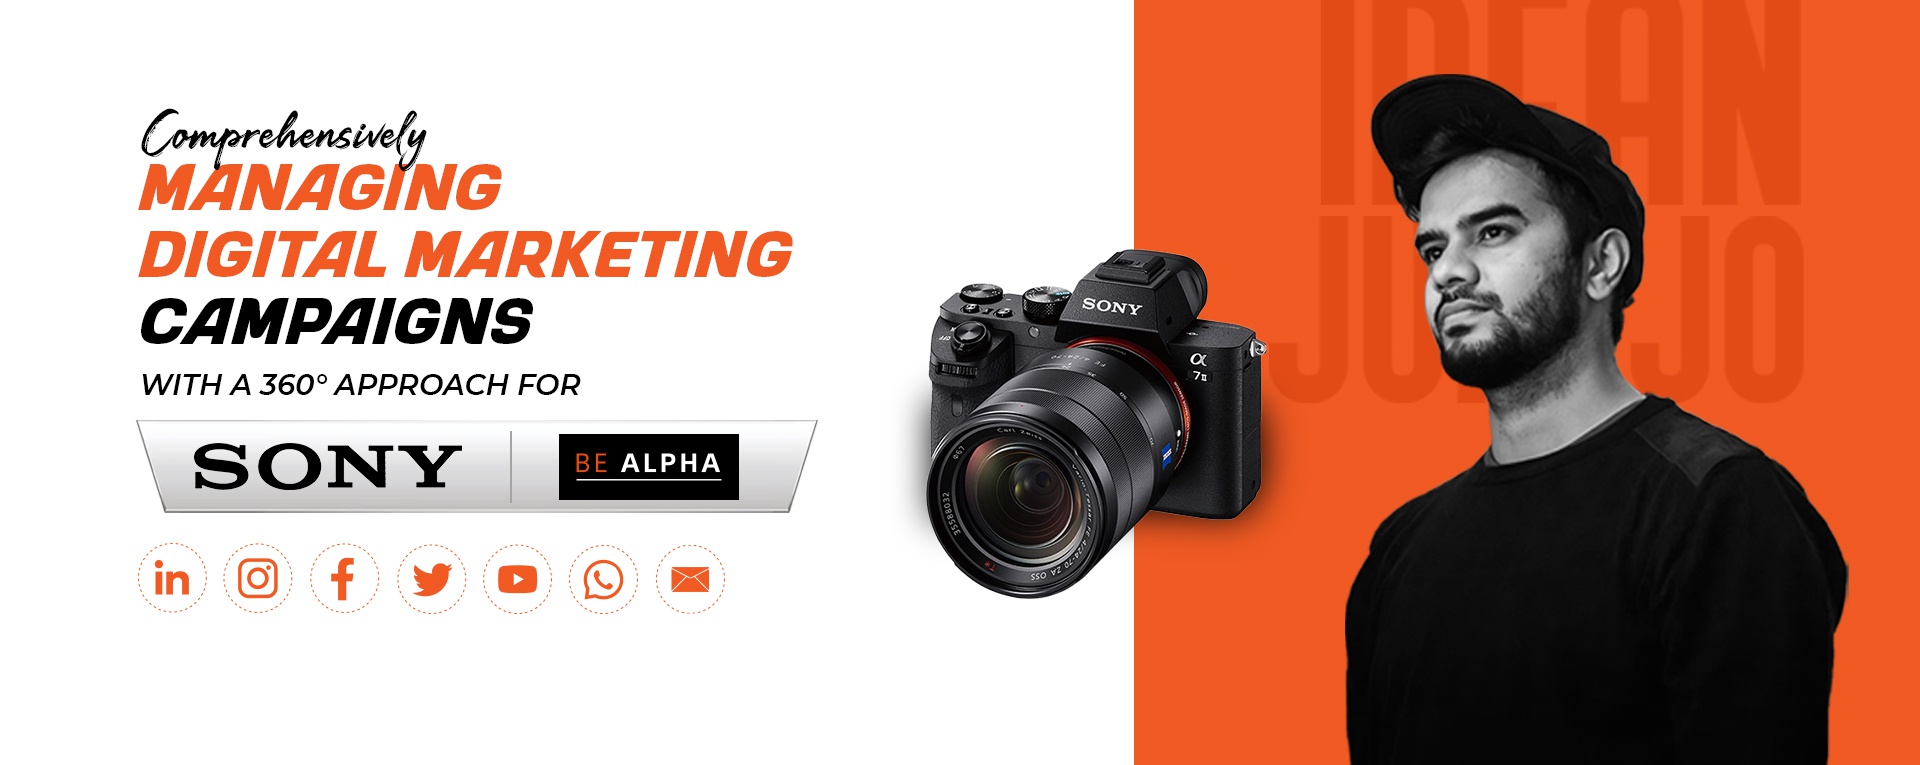 Sony Alpha Digital Marketing